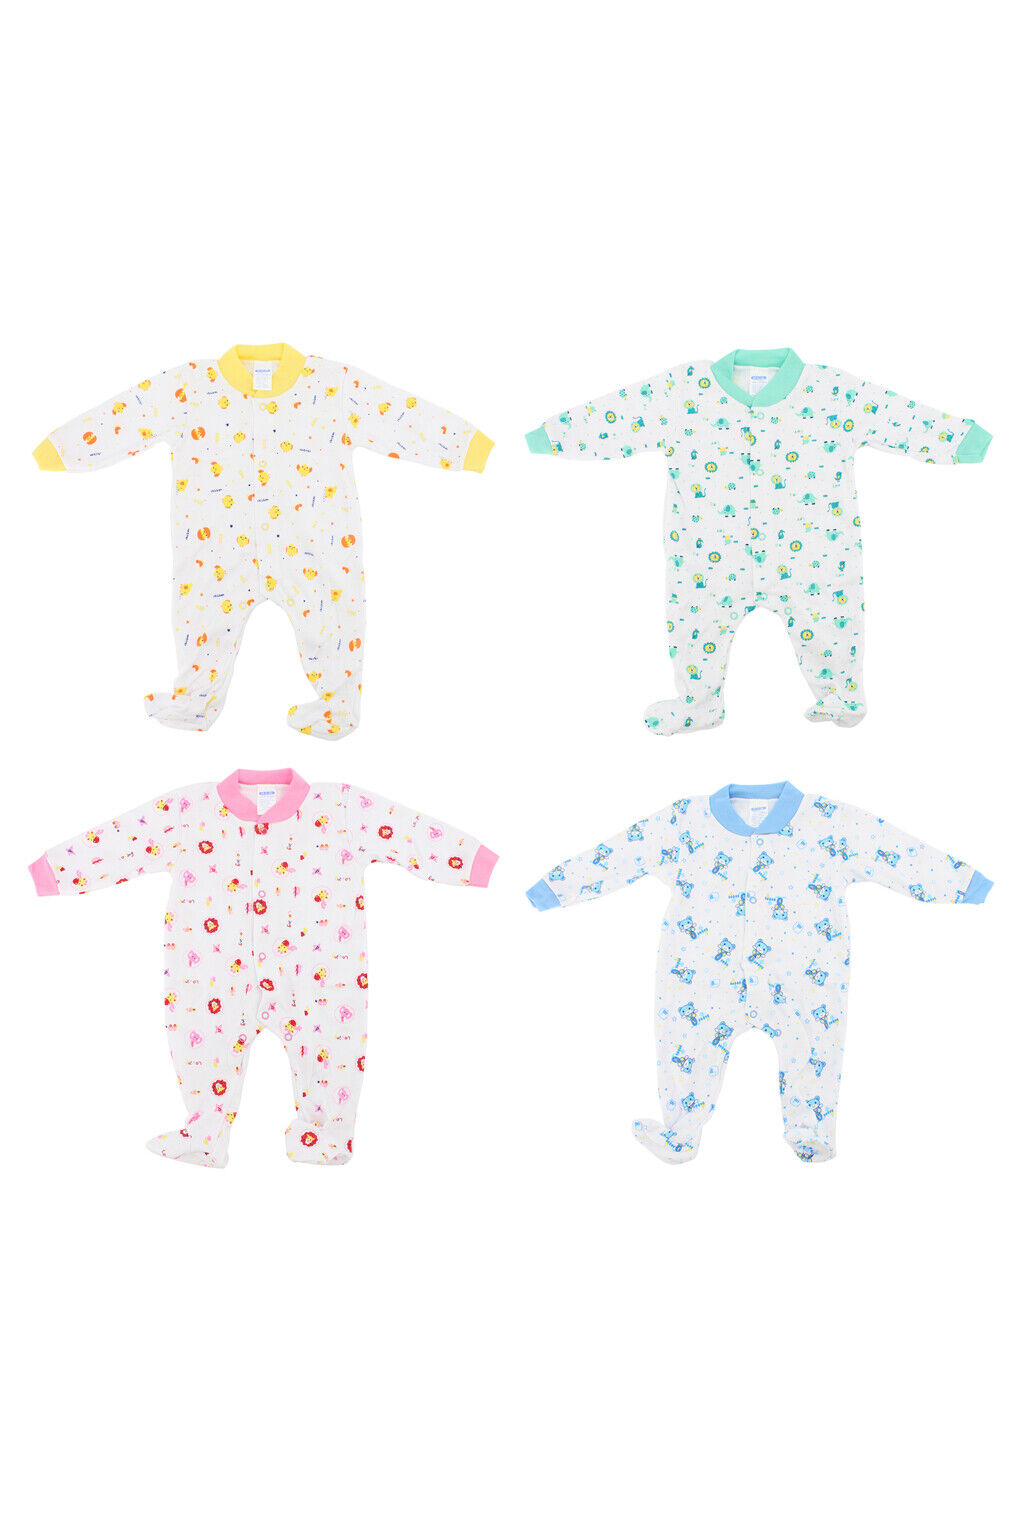 4 Baby Bodysuit Pajamas Long Sleeve Sleepers Print Solid Size 3-6 M 6-9 M 9-12 M